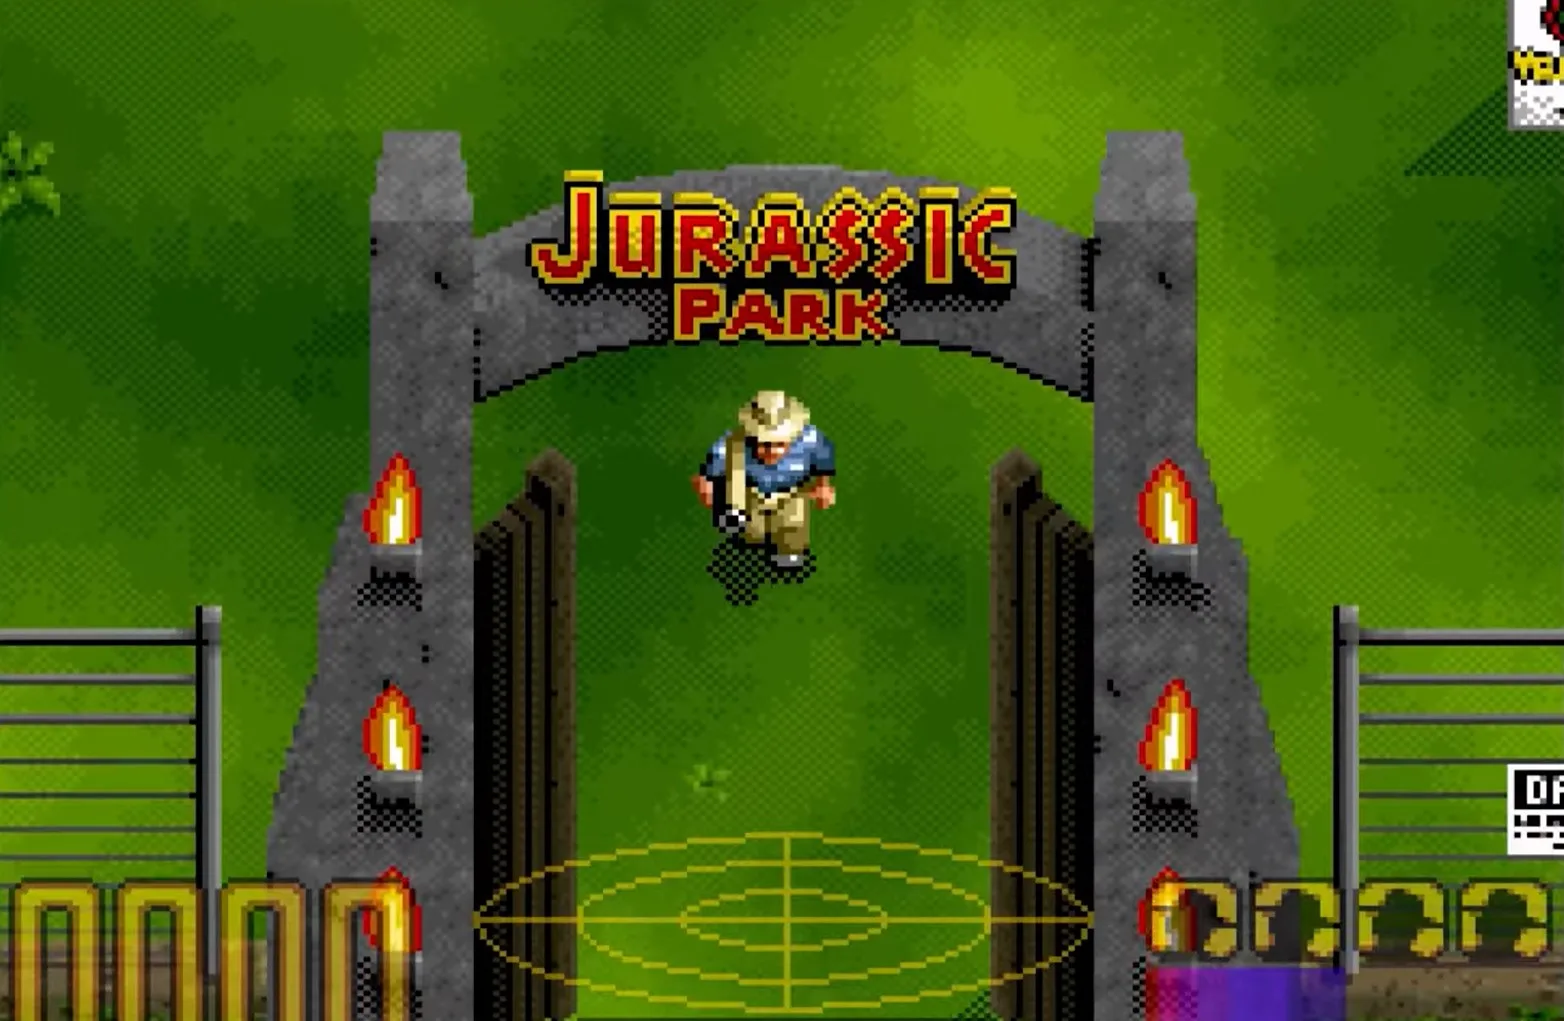 Retorno à Era Jurássica: “Jurassic Park Classic Games Collection” Chega ao Switch